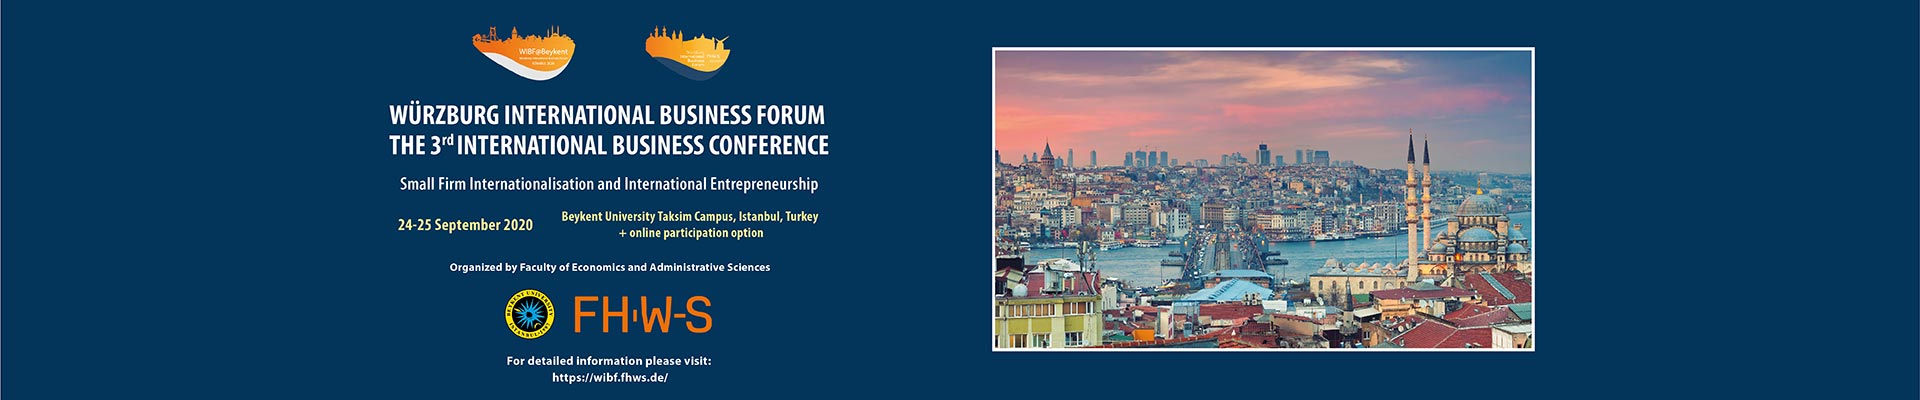 Würzburg International Business Forum - The 3. International Business Conference